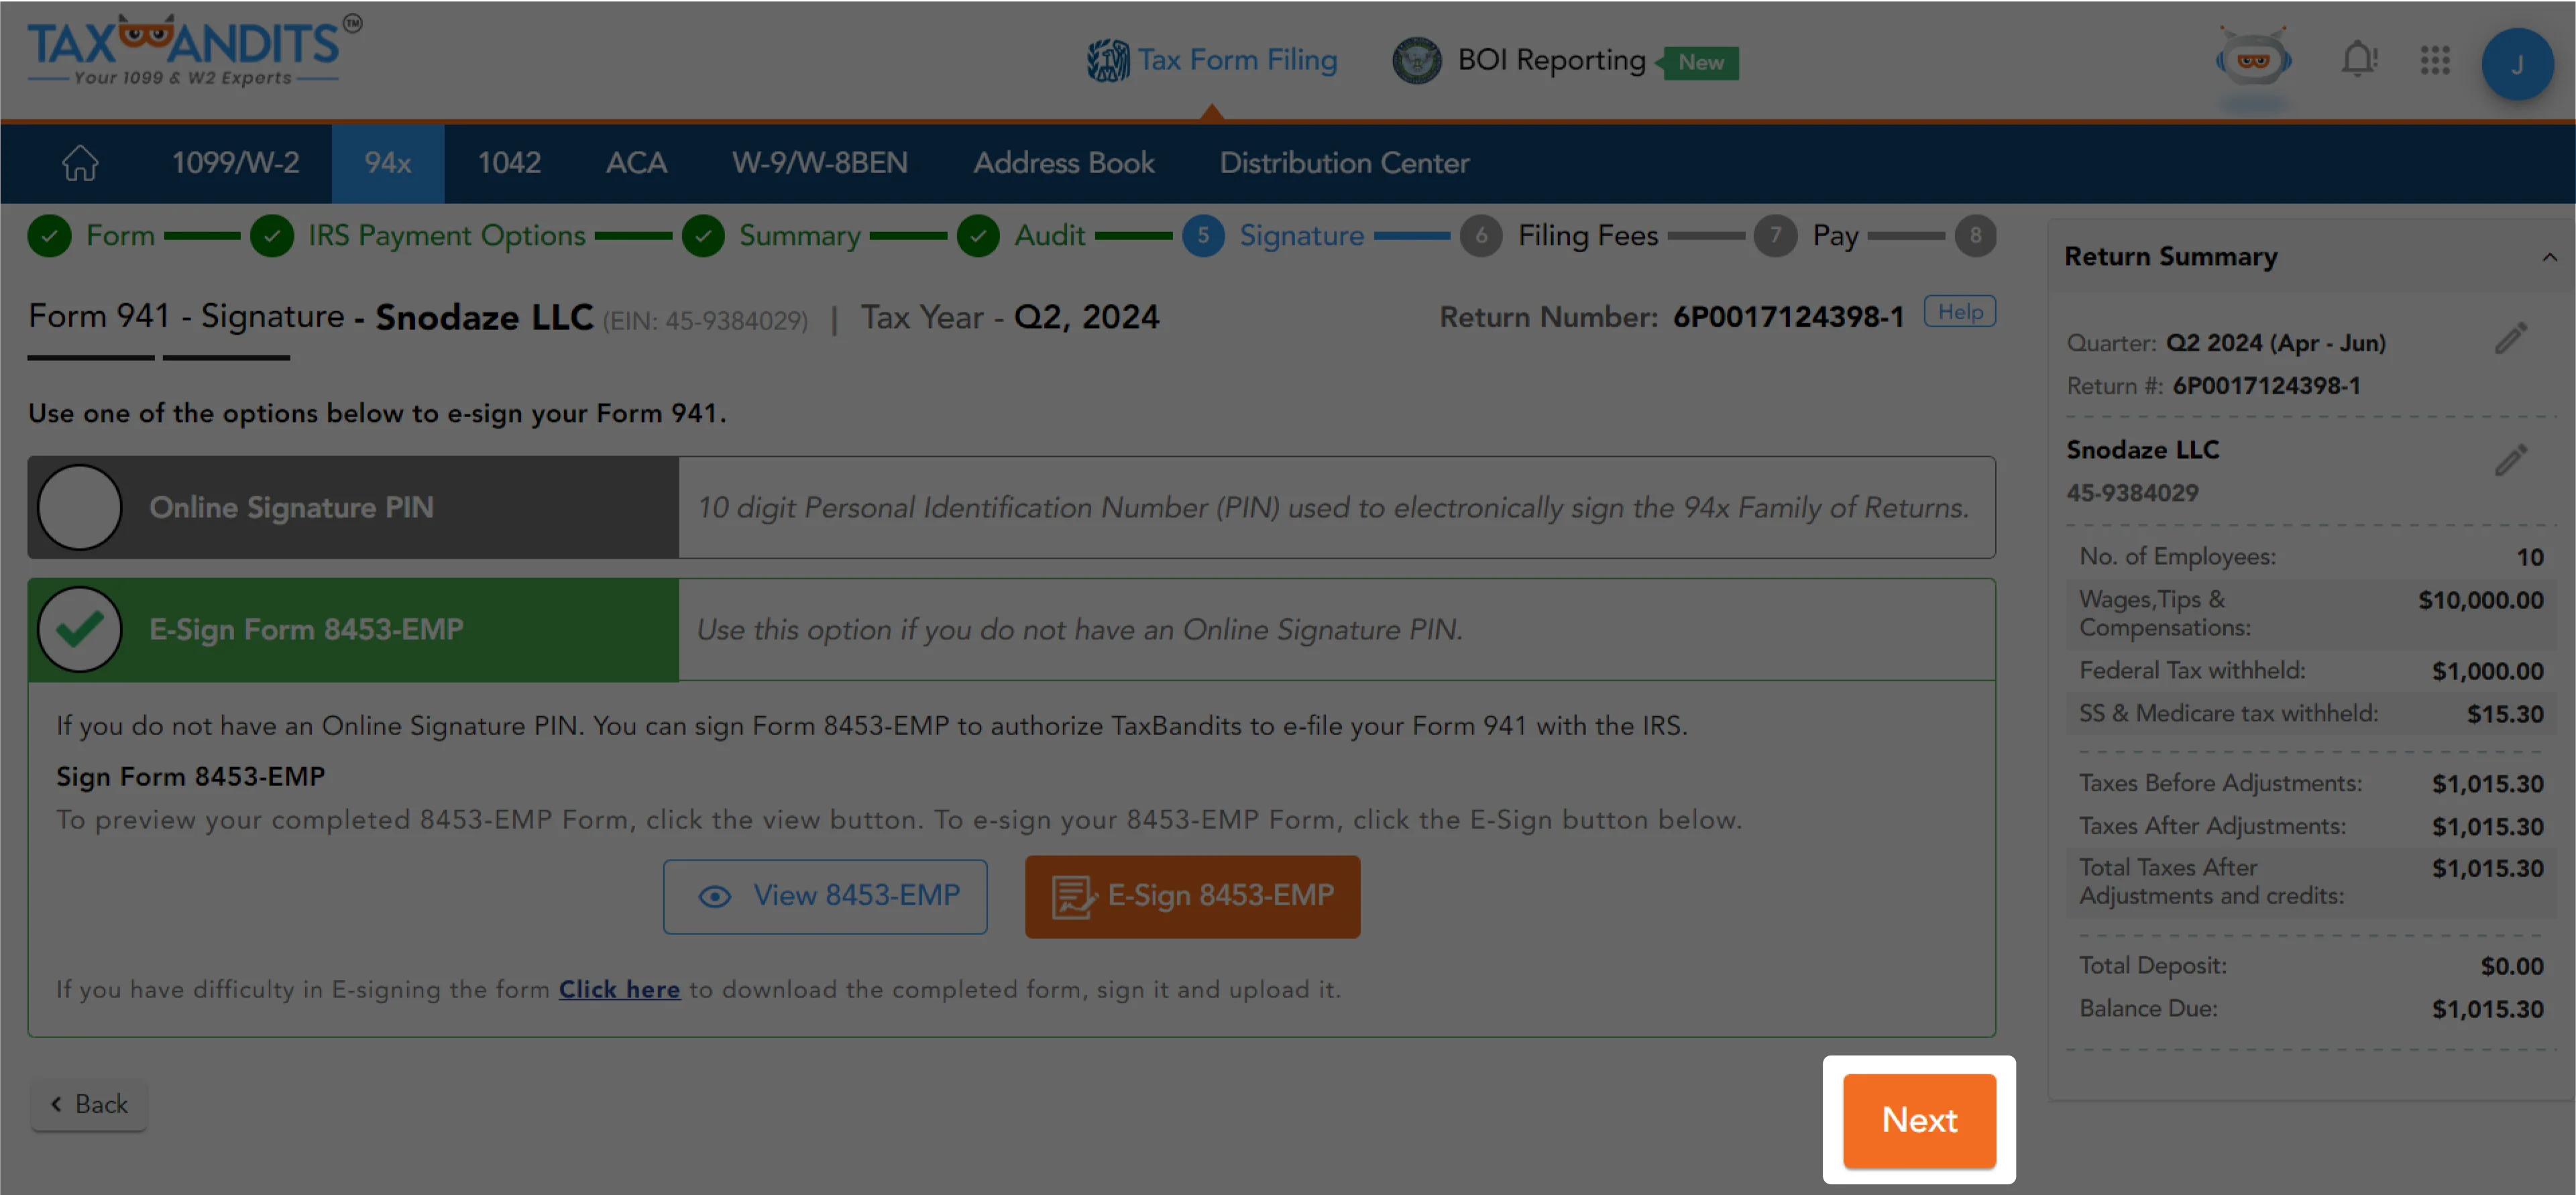 Sign Form using E-Sign 8453-EMP and click Next